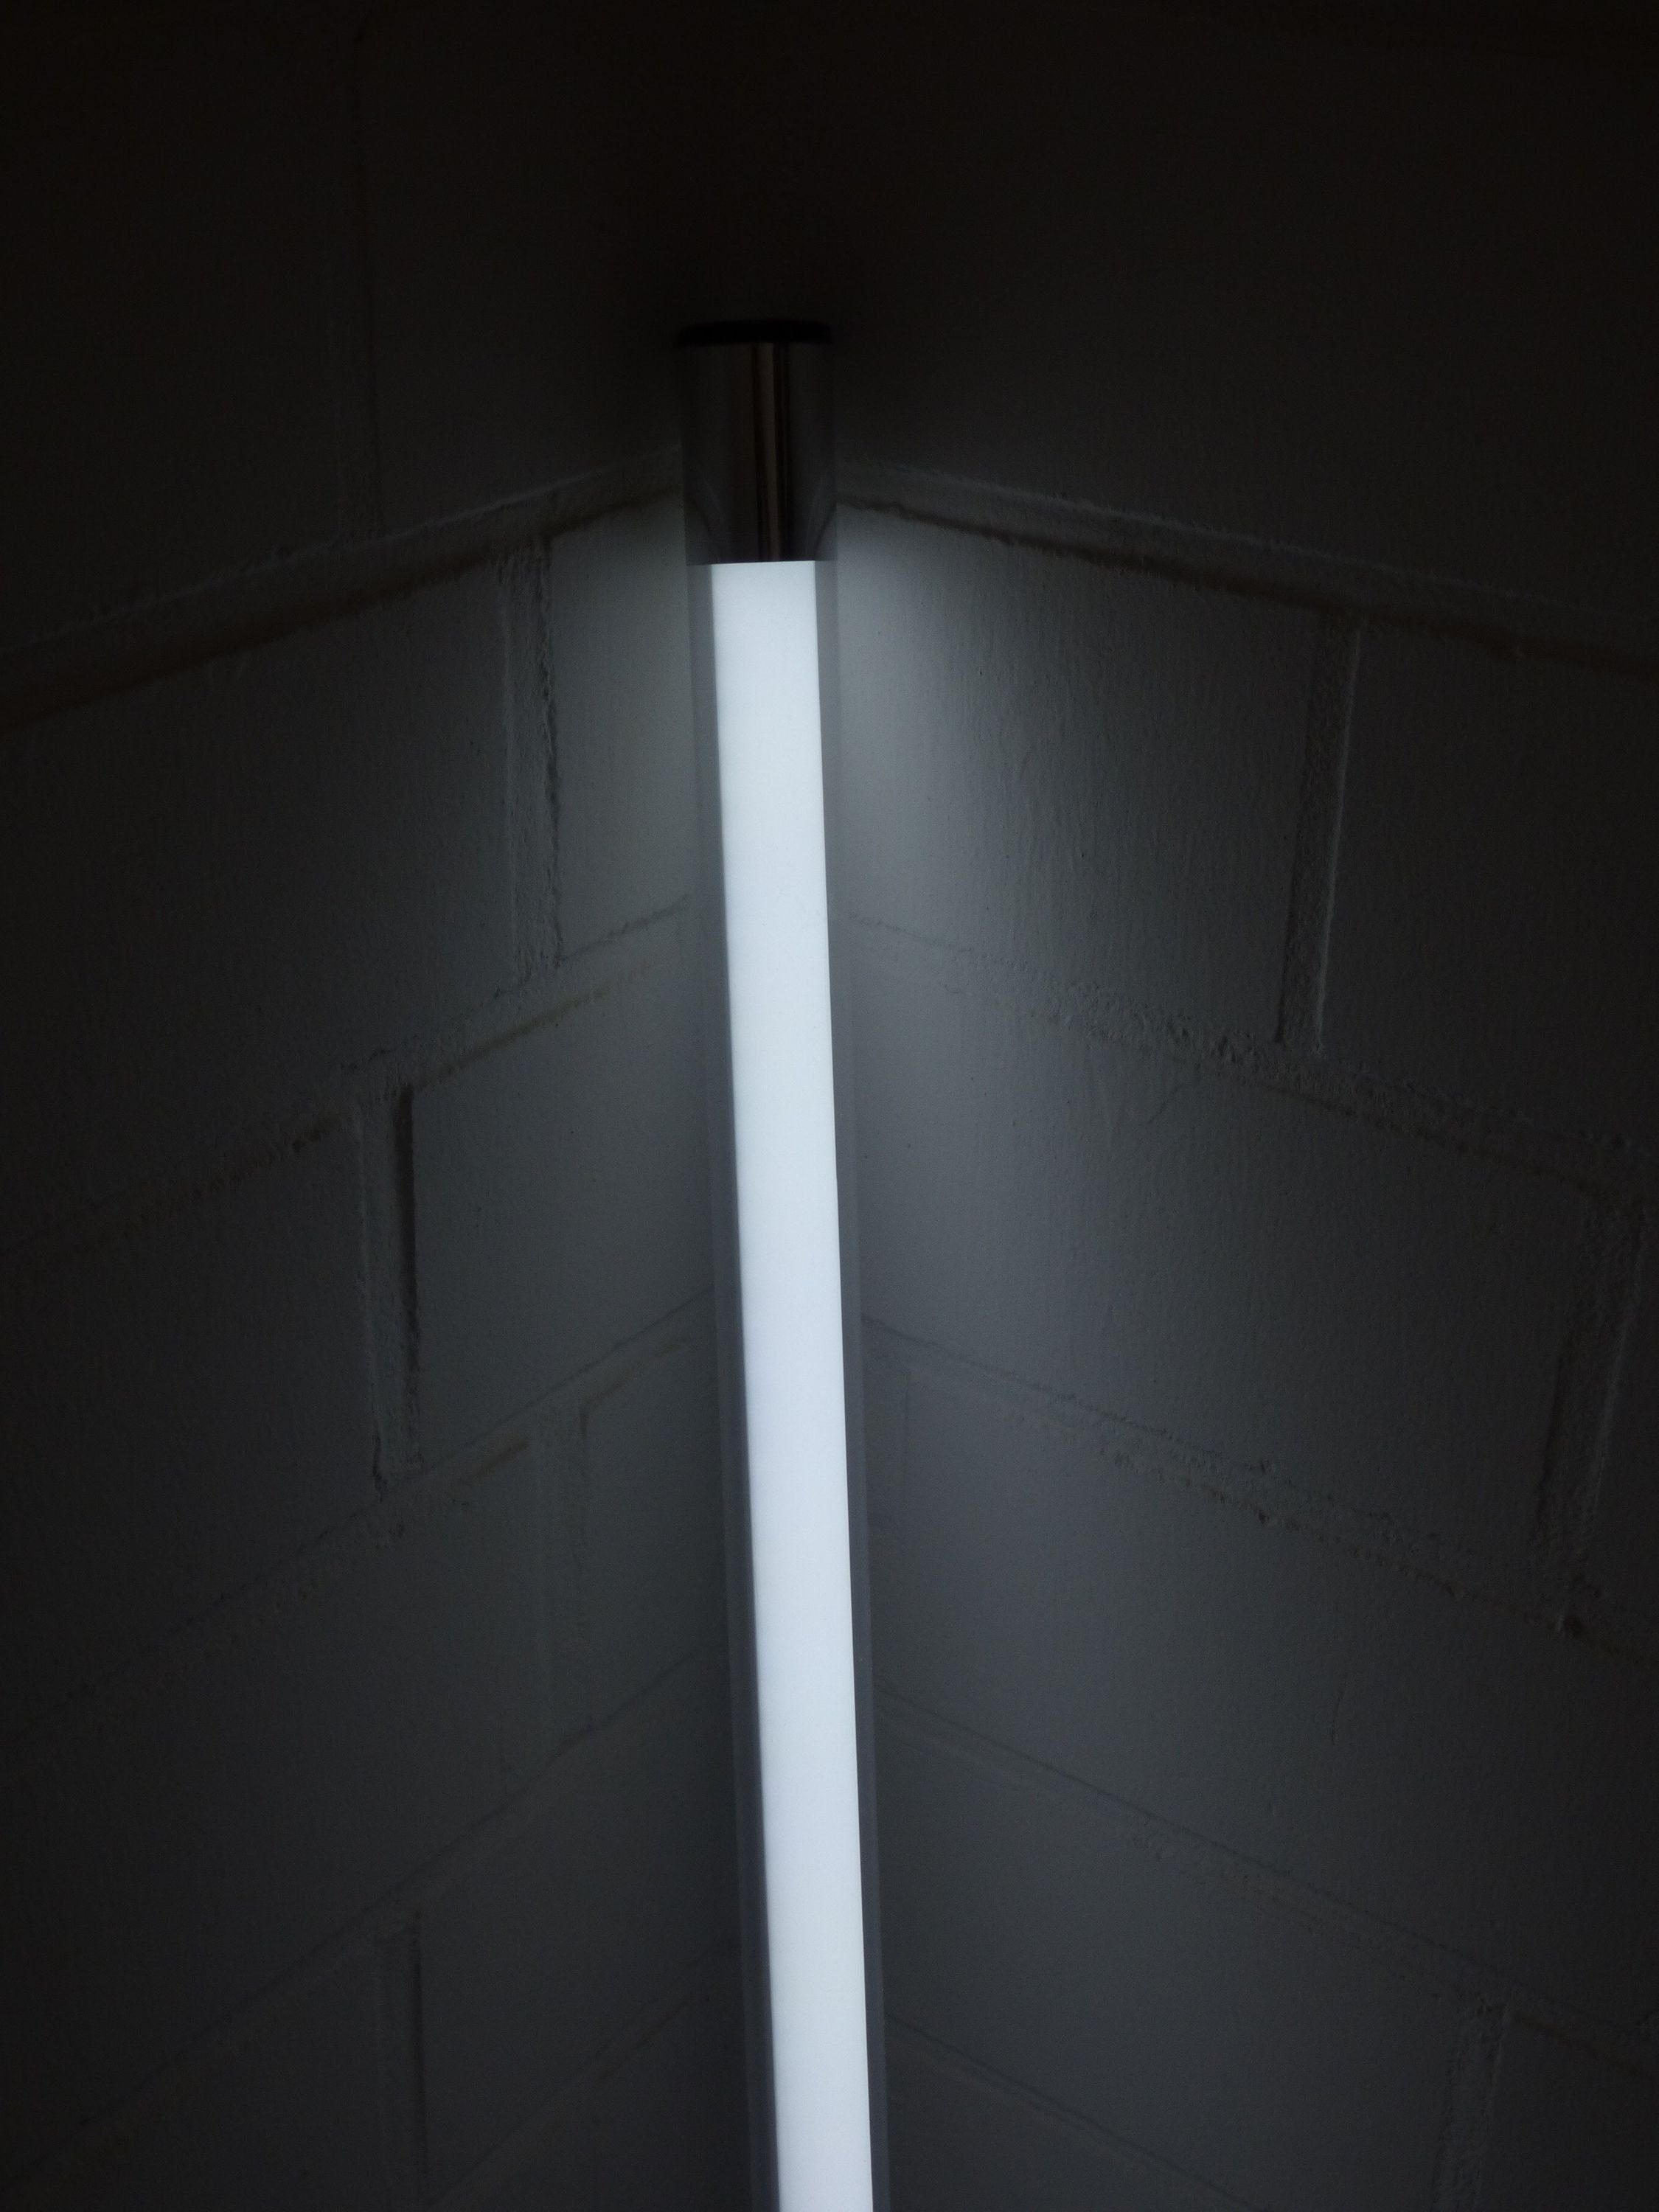 XENON LED Wandleuchte LED Leuchtstab 18 Watt kalt weiß 1700 Lumen 123 cm Innen IP-20, LED Röhre T8, Xenon Kalt Weiß